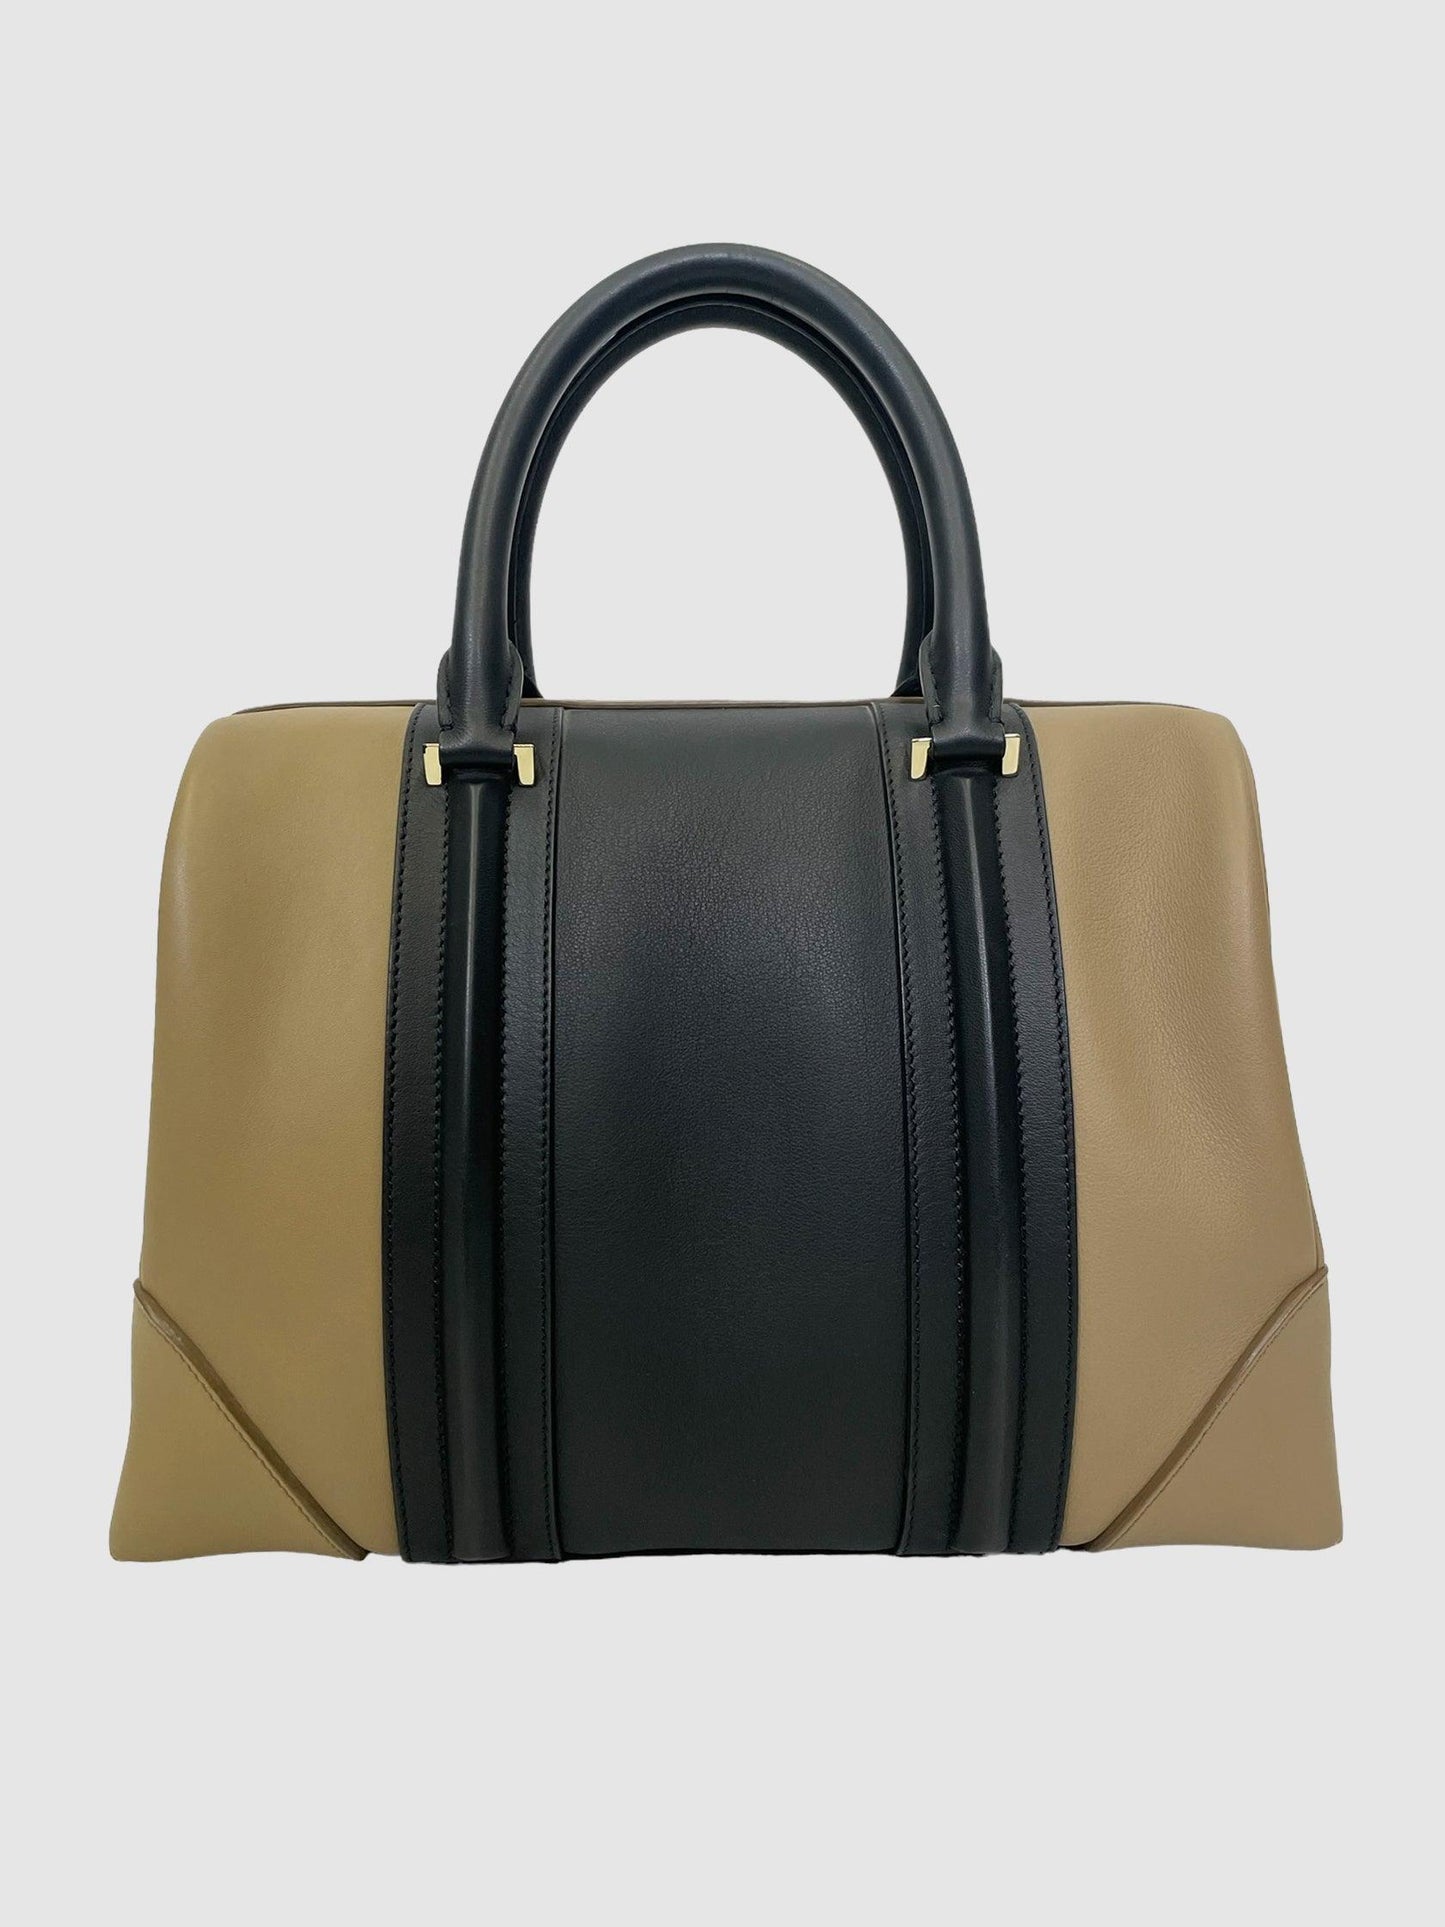 Givenchy Taupe / Black Lucrezia Bag - Second Nature Boutique